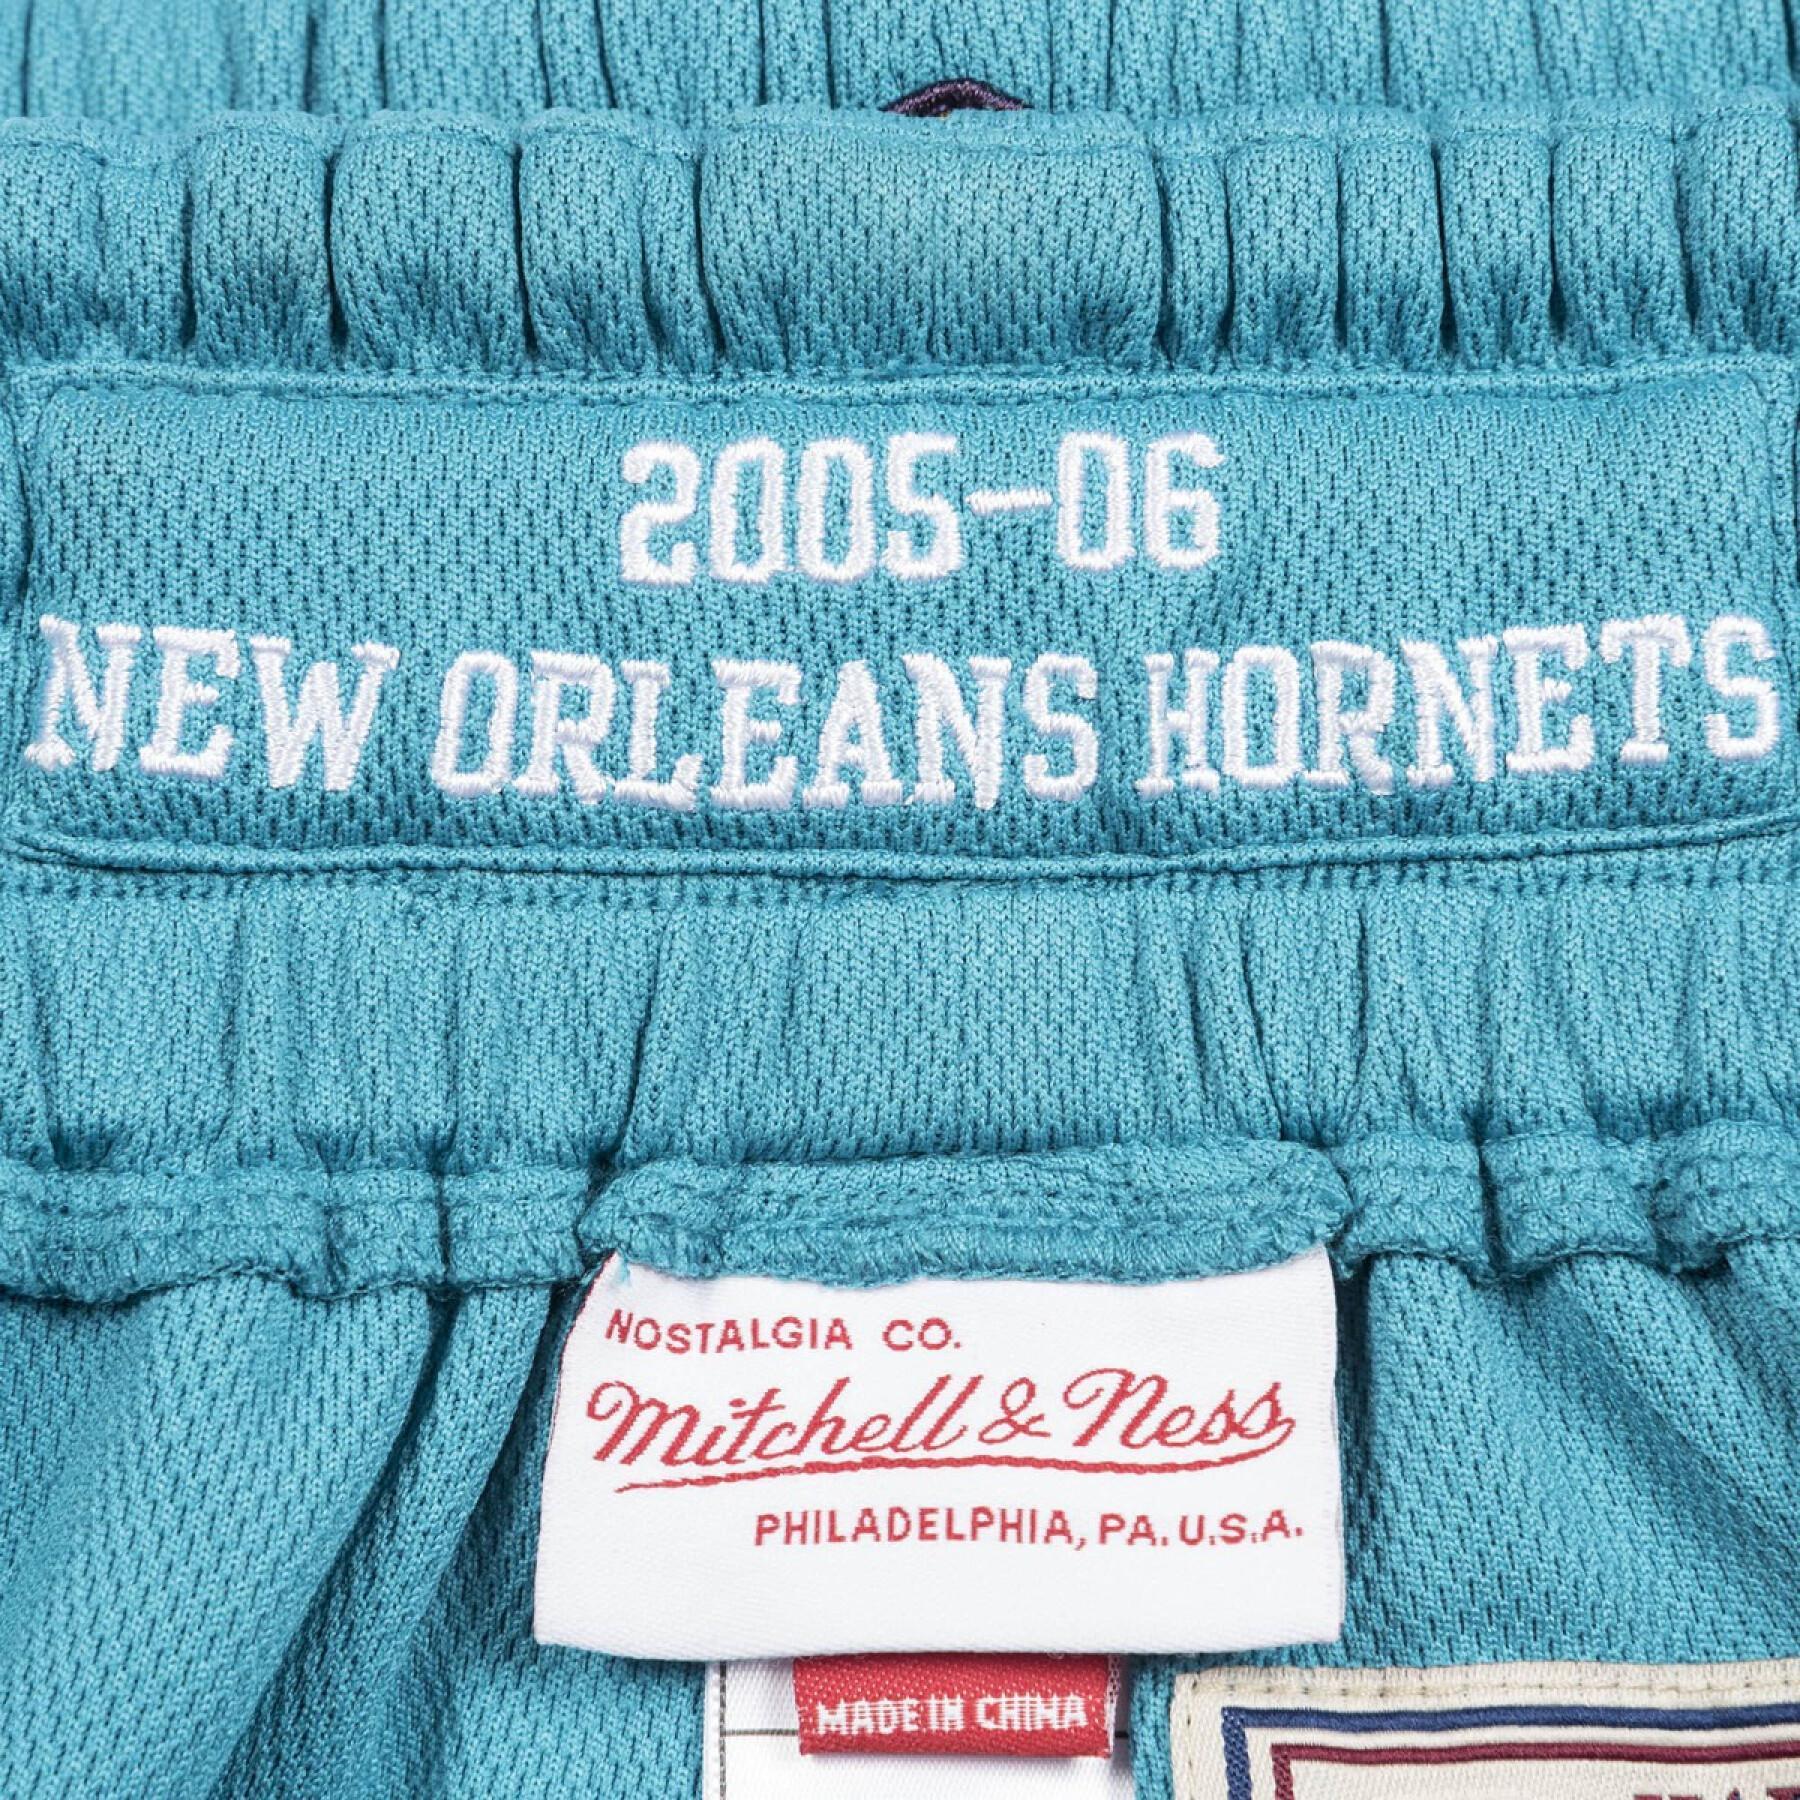 Äkta shorts New Orleans Hornets nba